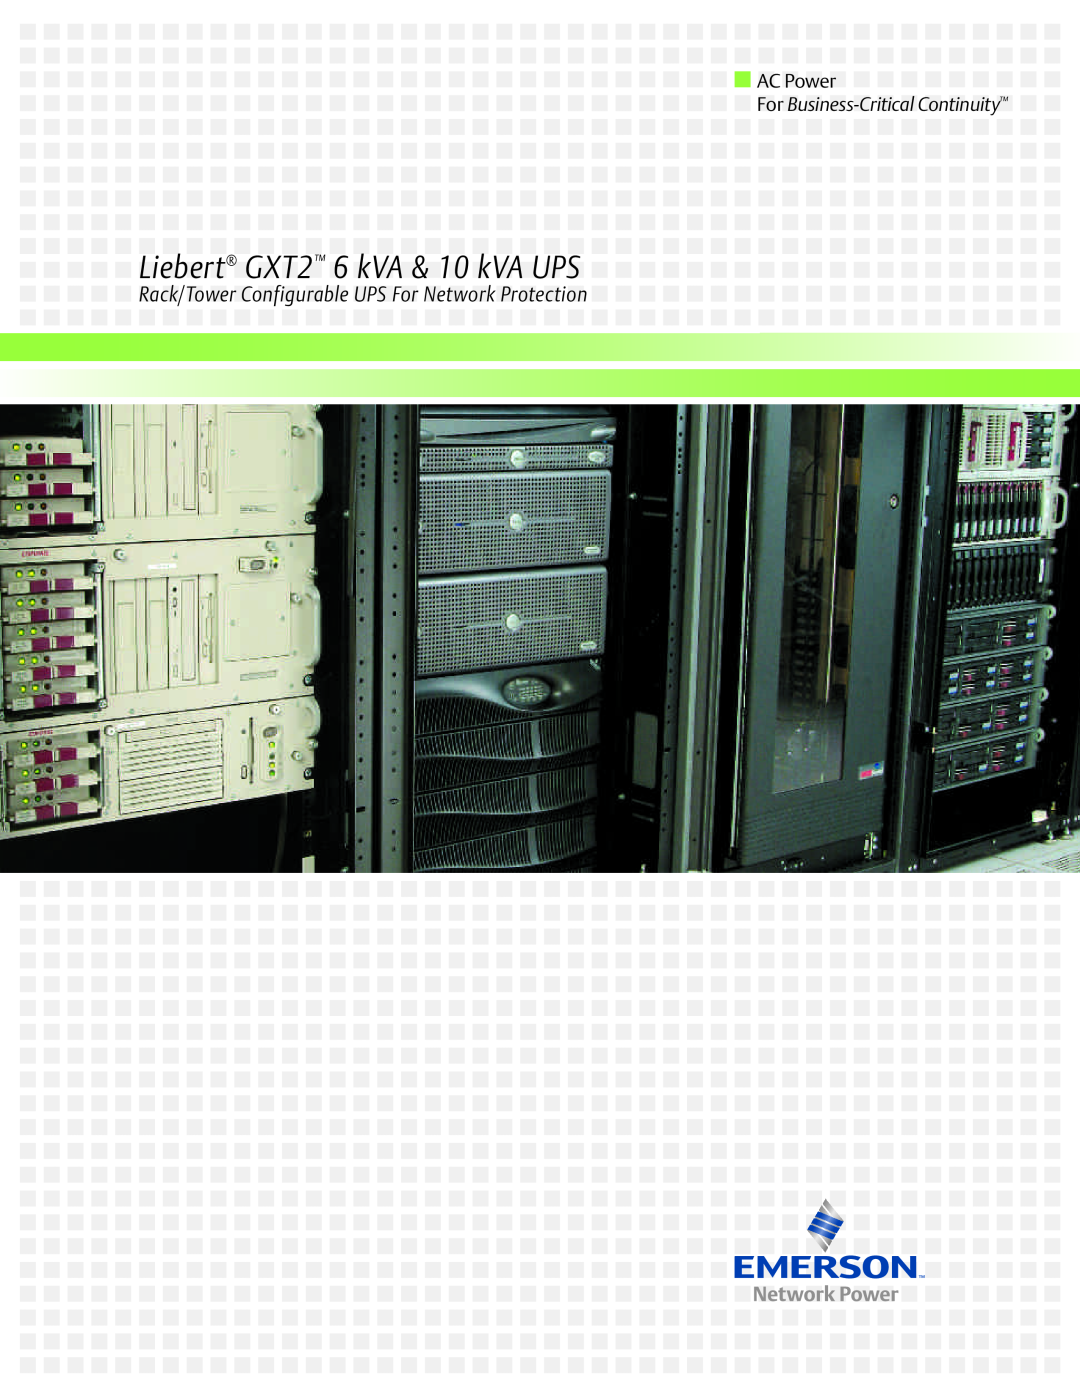 Emerson manual LiebertGXT2 6 kVA&10 kVAUPS, Rack/Tower Configurable UPS For Network Protection, AC Power 